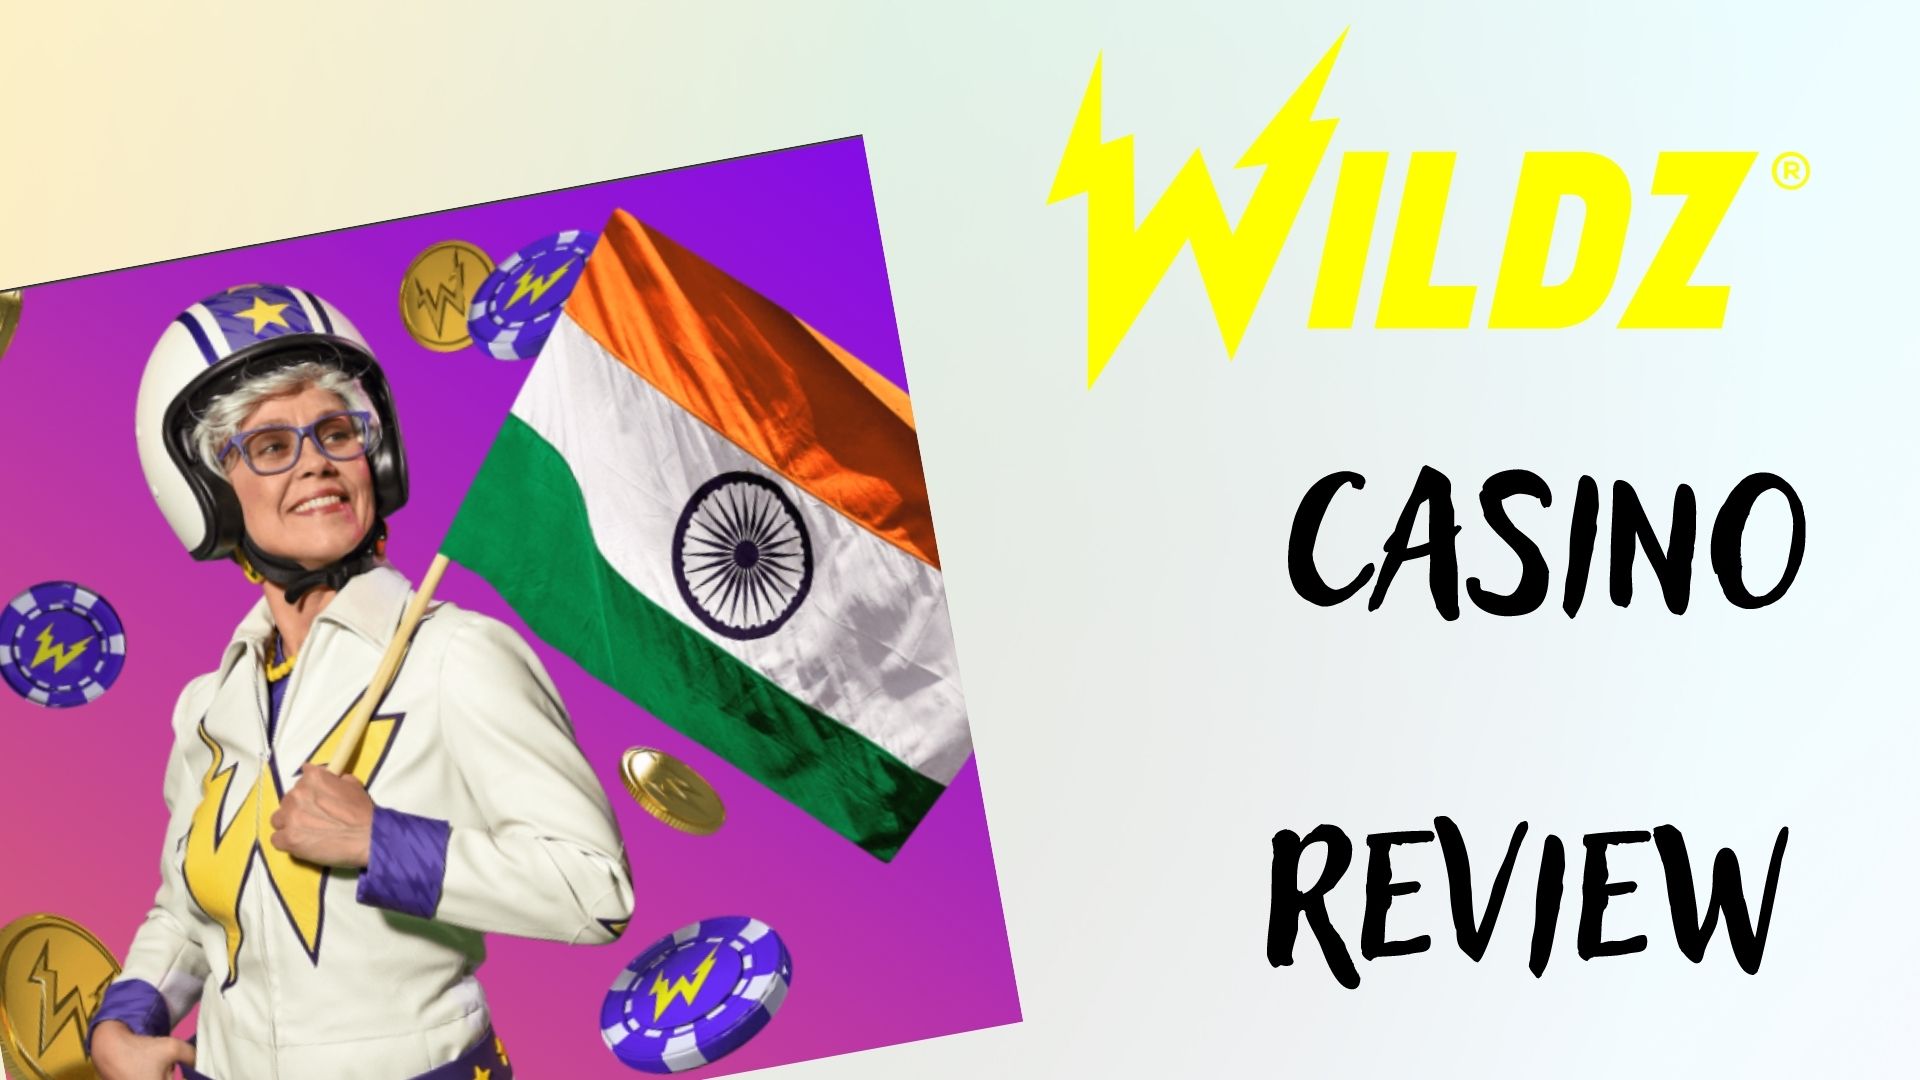 Wildz Online Casino Review